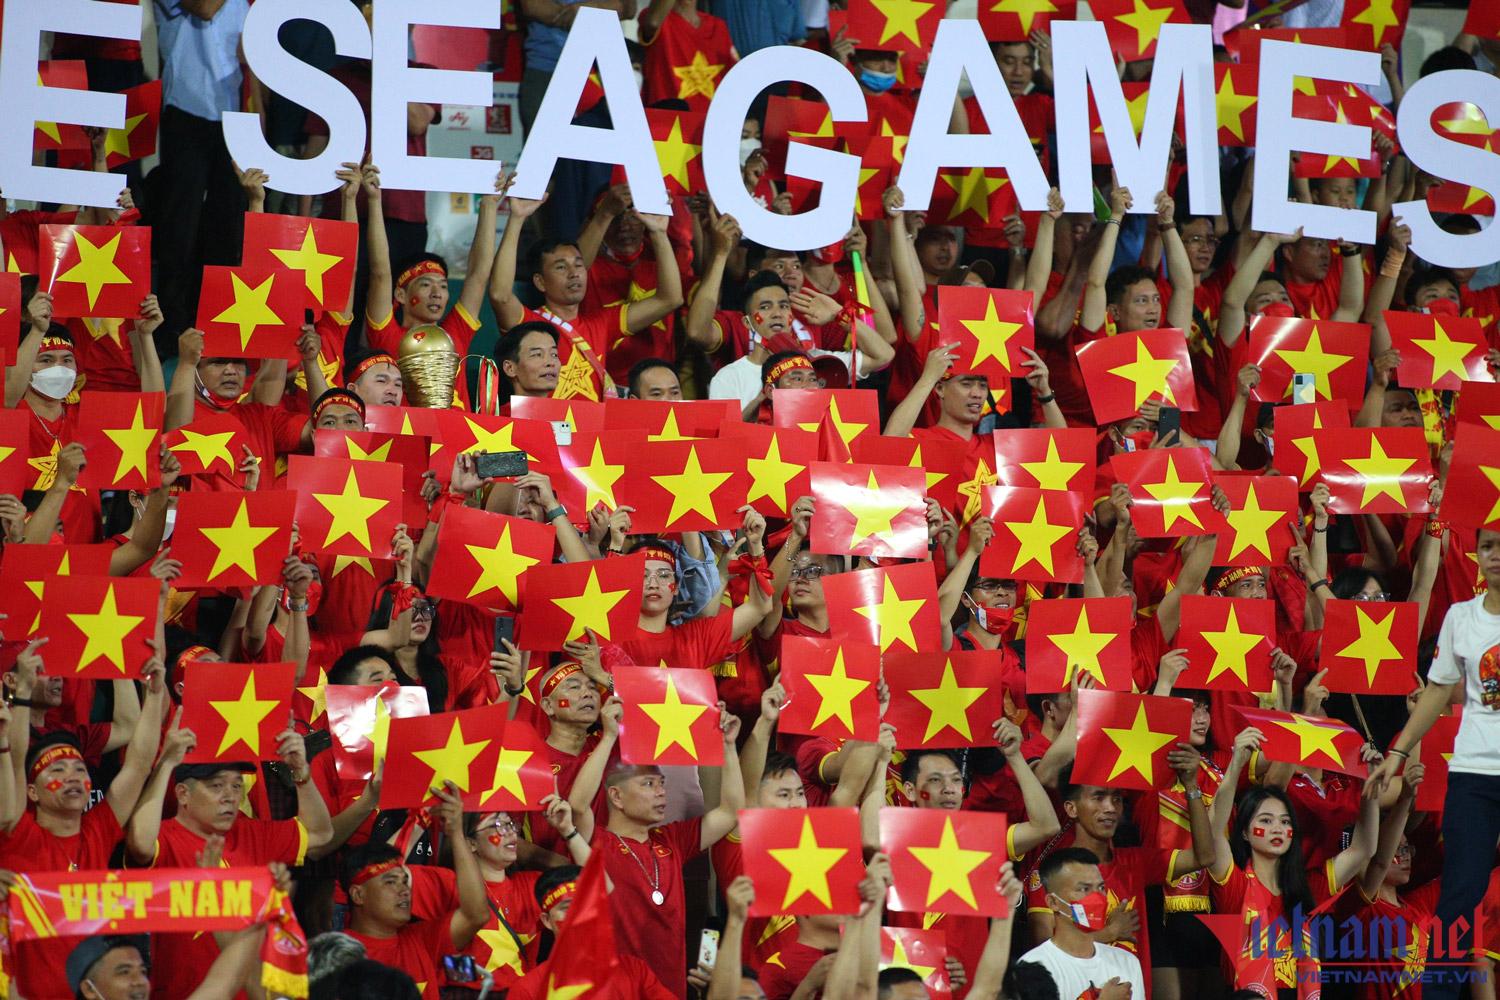 SEA Games 31 khai mạc: Cảm ơn Việt Nam!